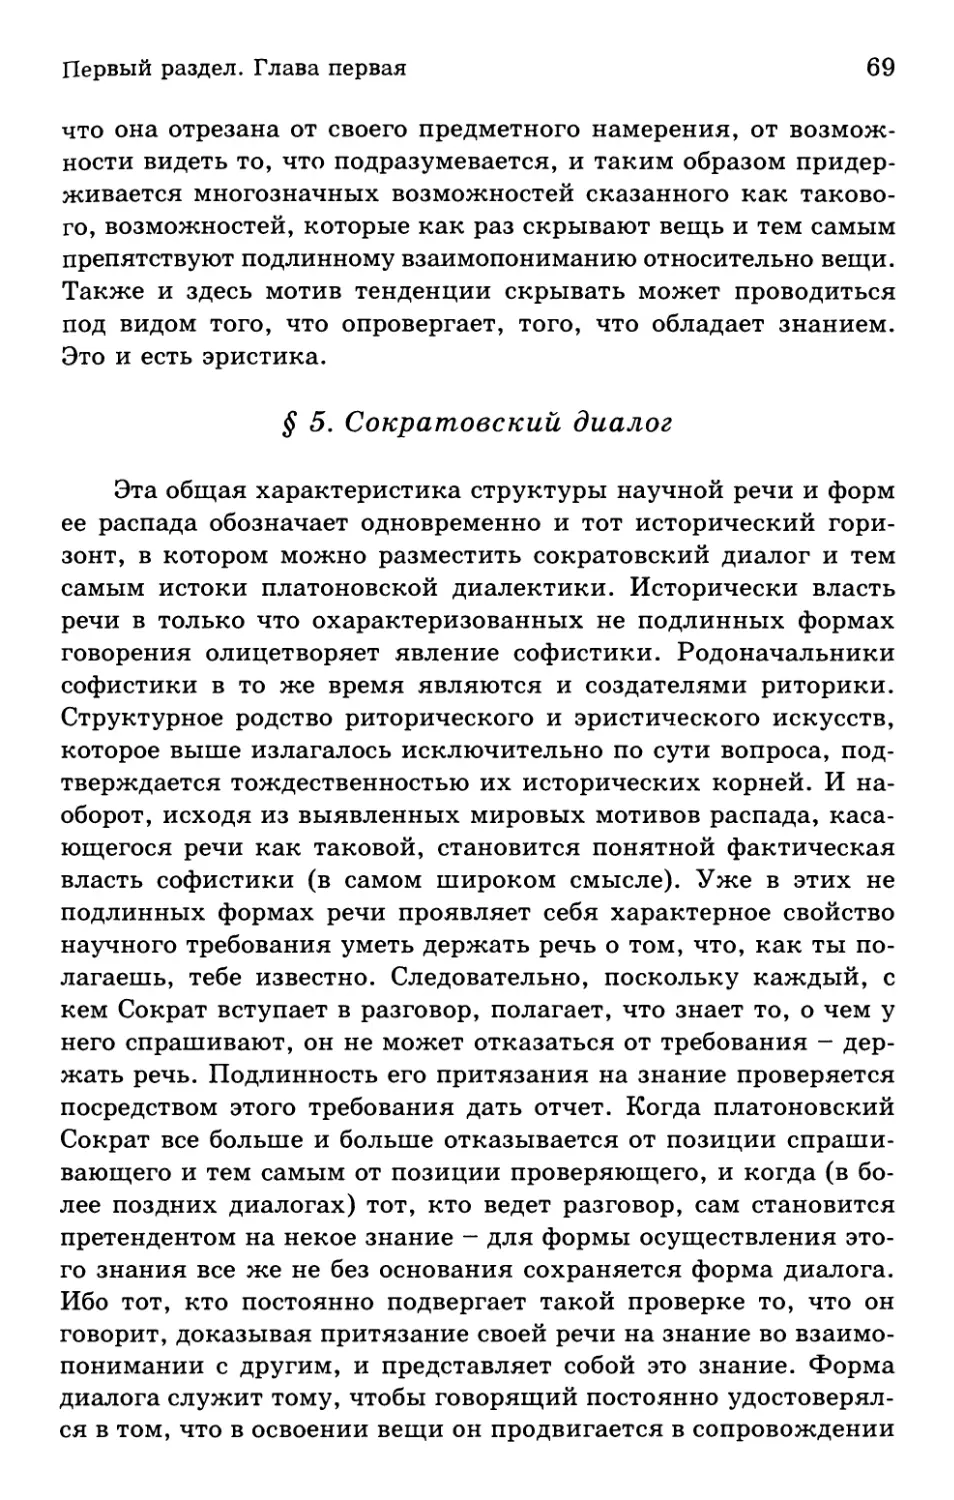 § 5. Сократовский диалог